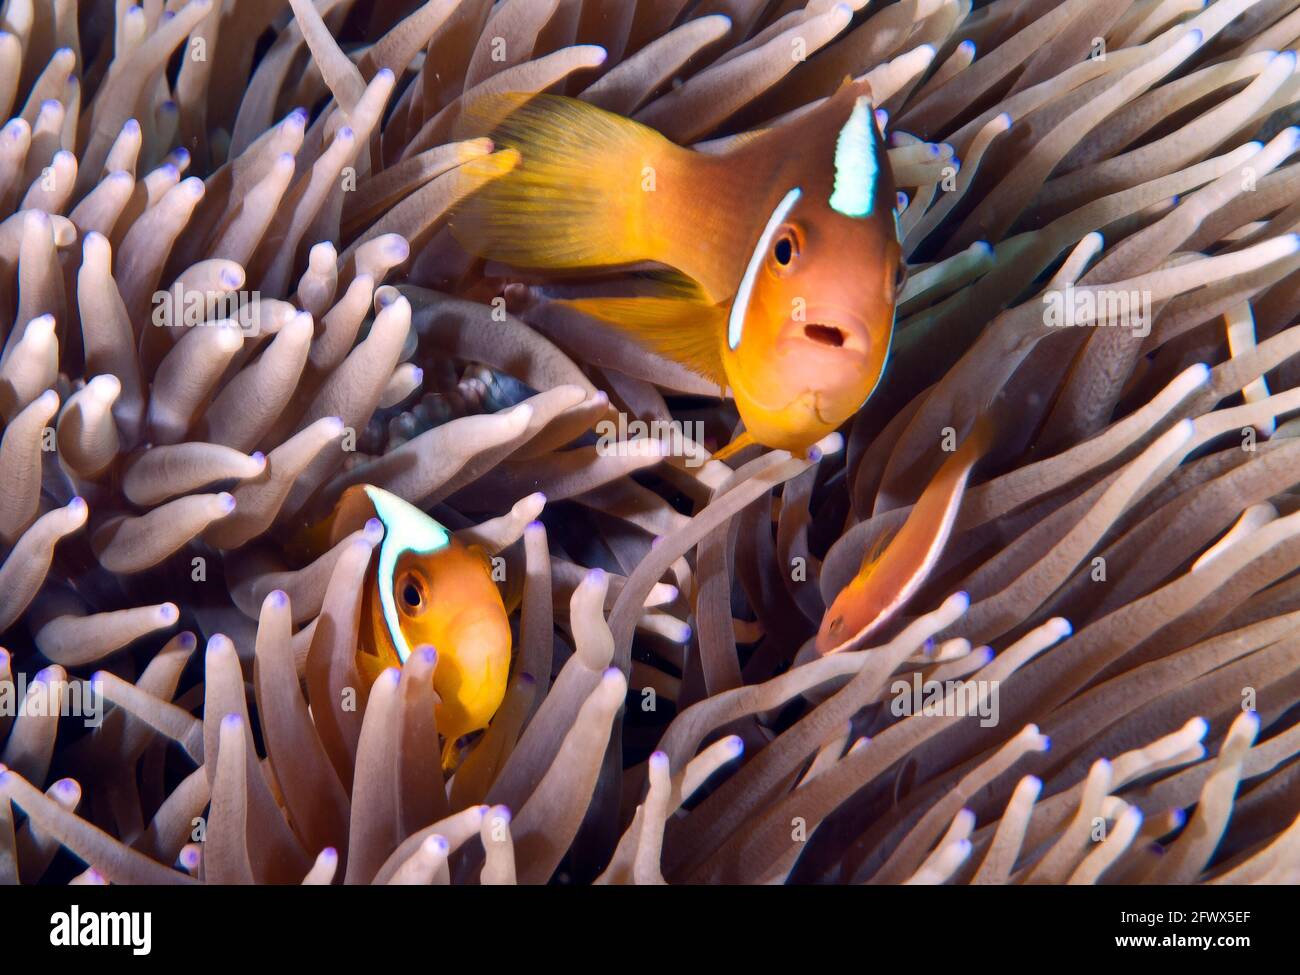 Trio of white-bonnet anemone fishes (Amphiprion  leucokranos) on their anemone home, Solomon Islands Stock Photo